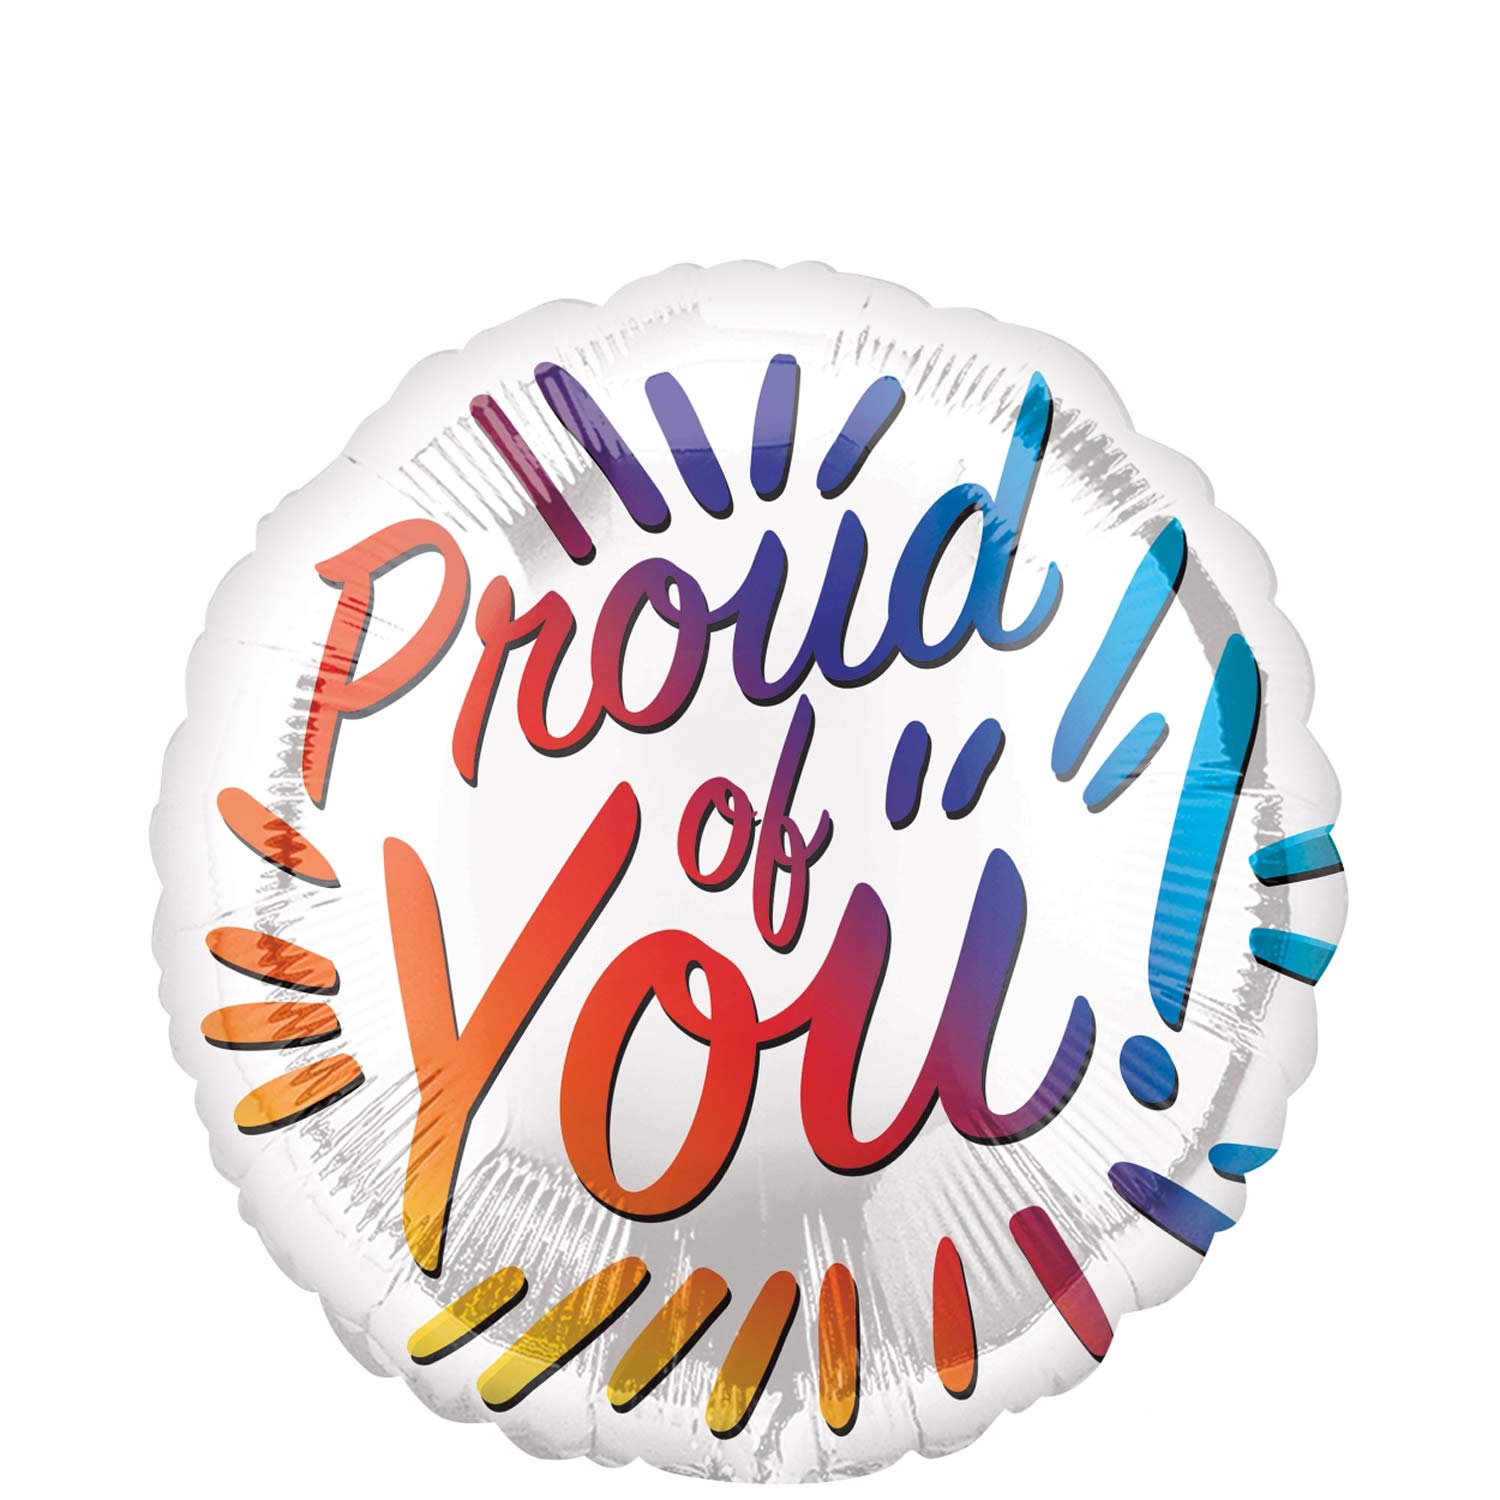 Proud of You Rainbow Letters Foil Balloon 43x43cm - Party Centre